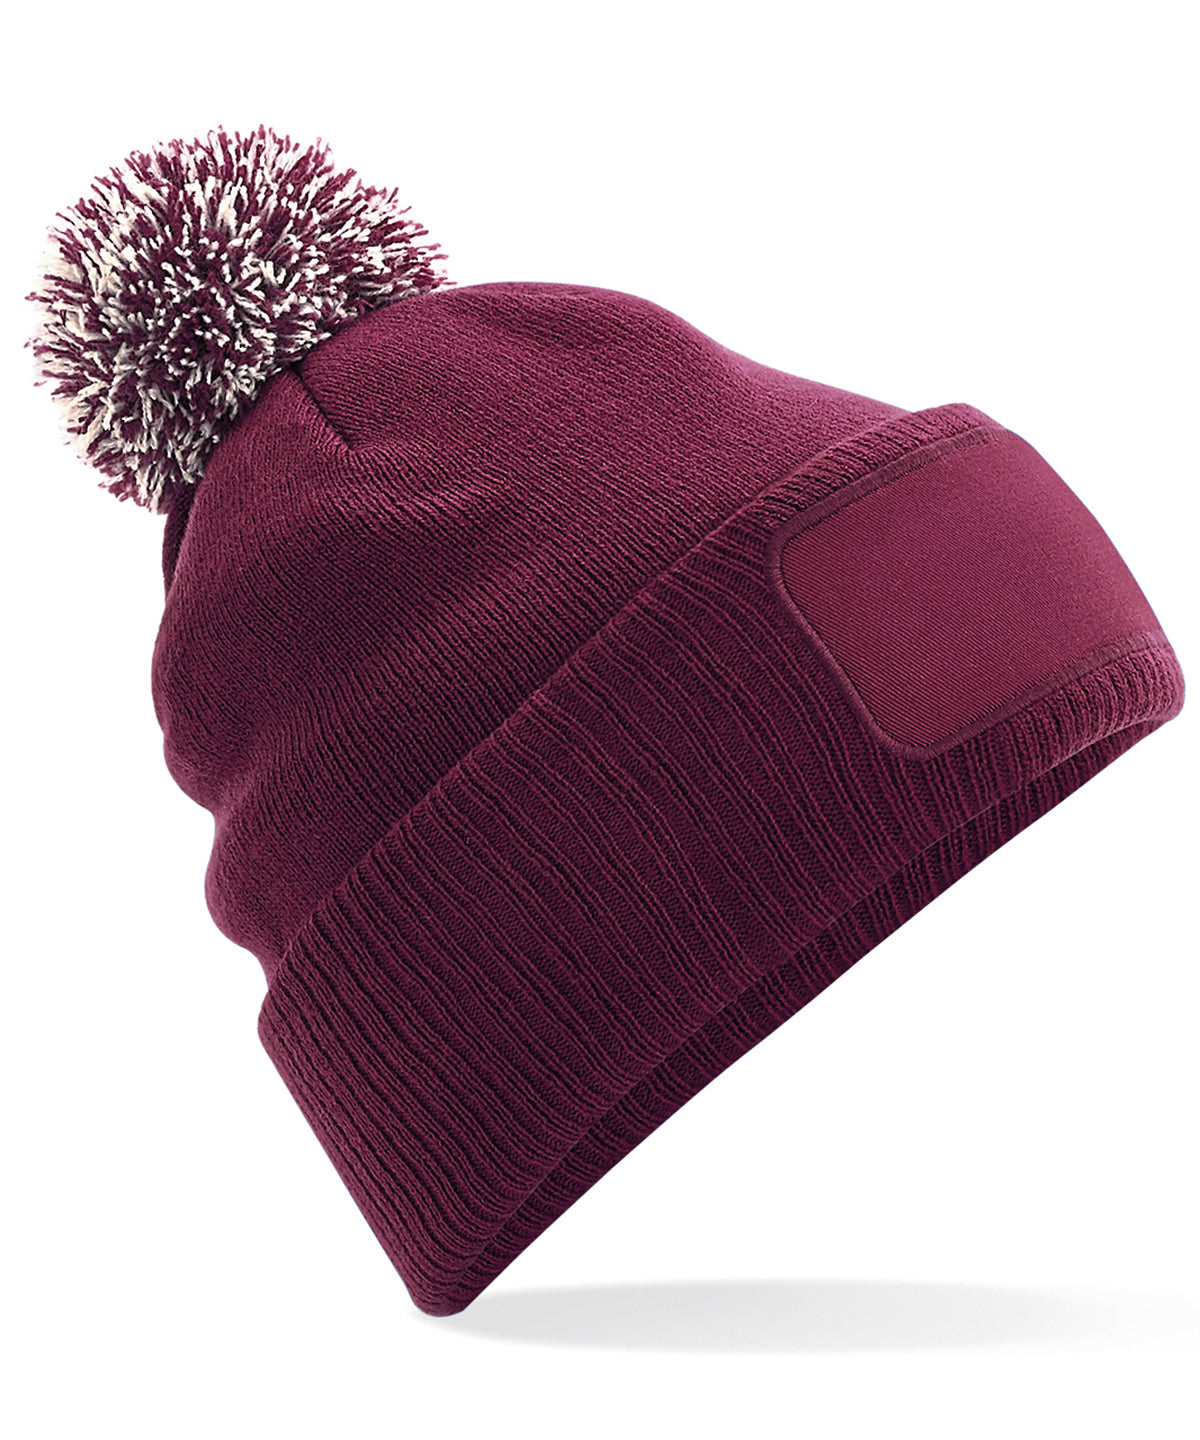 Personalised Hats - Burgundy Beechfield Snowstar® patch beanie